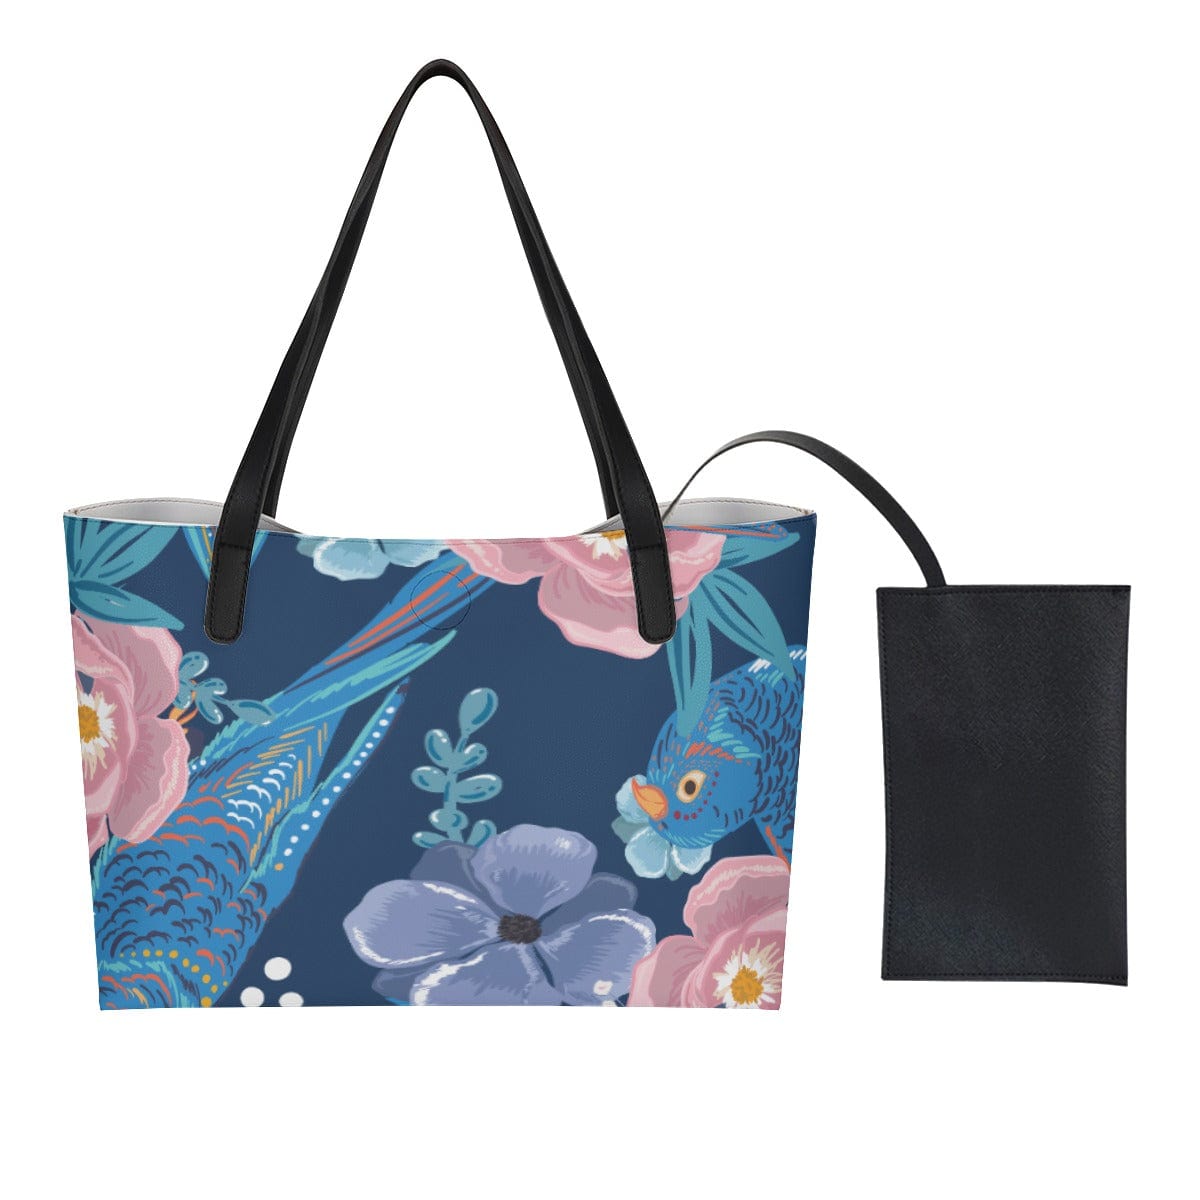 Yoycol U / White Shopping Tote Bag With Black Mini Purse